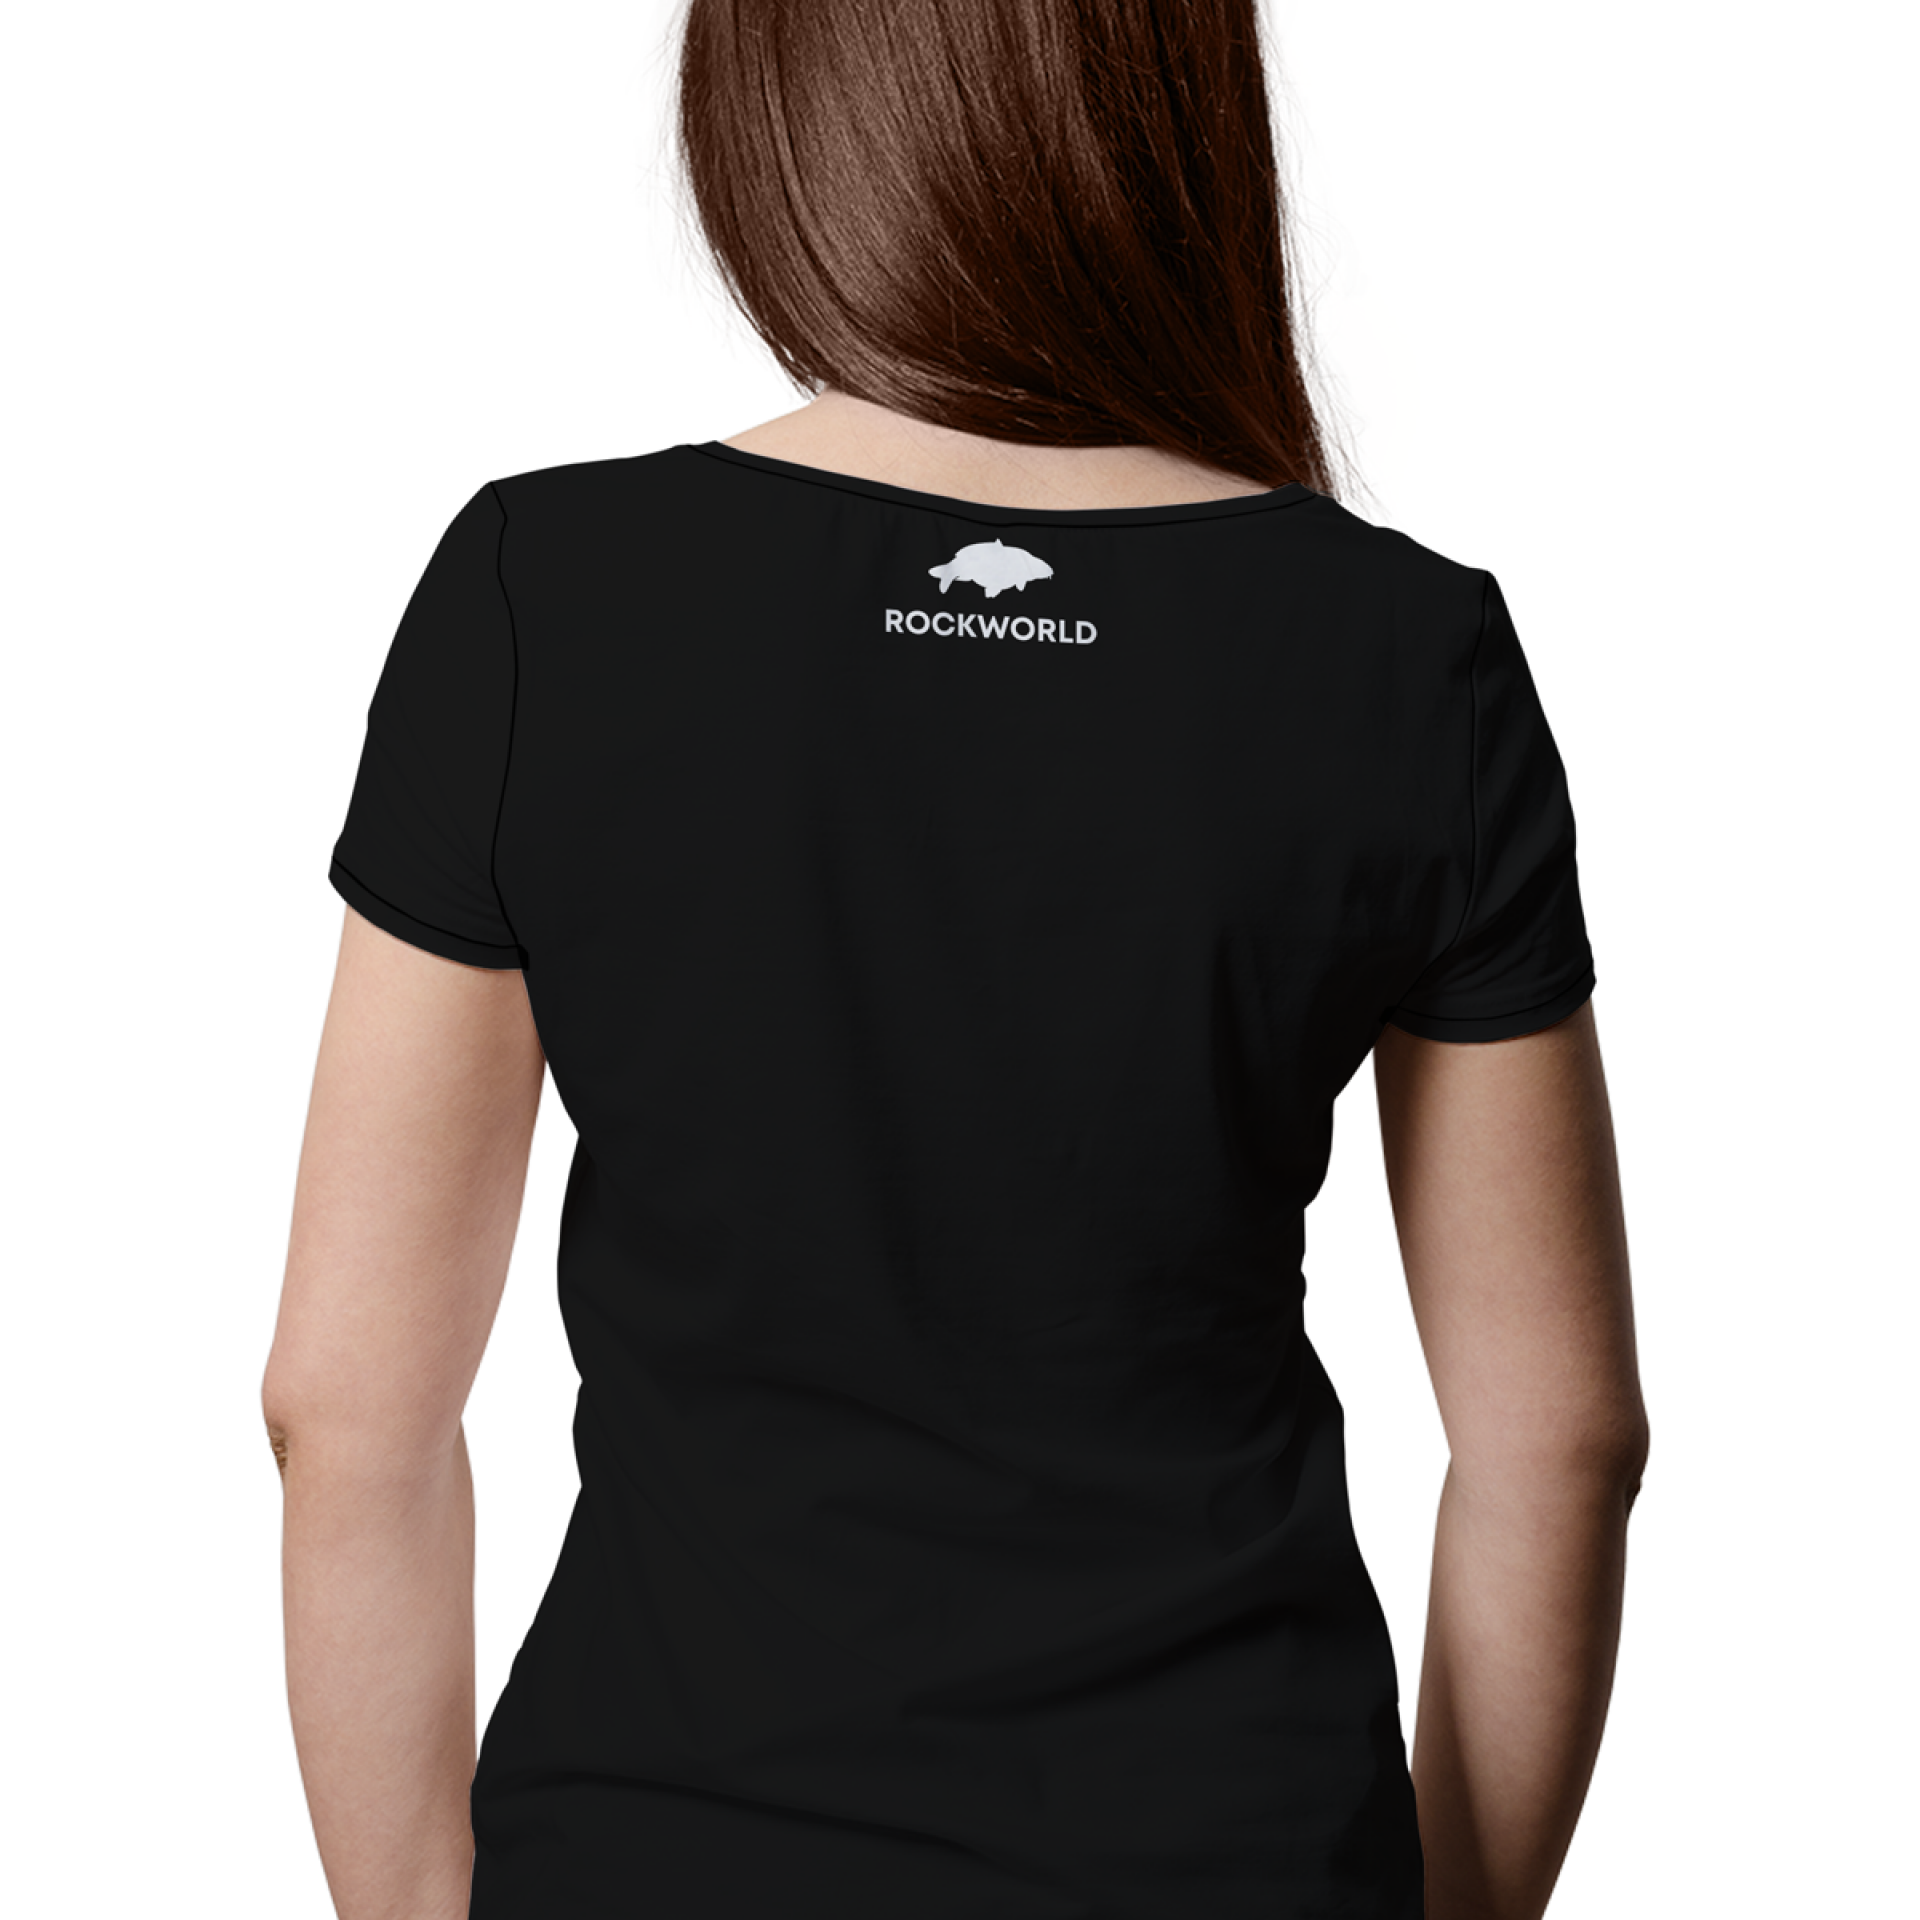 Rockworld Carp Touch - koszulka damska czarna